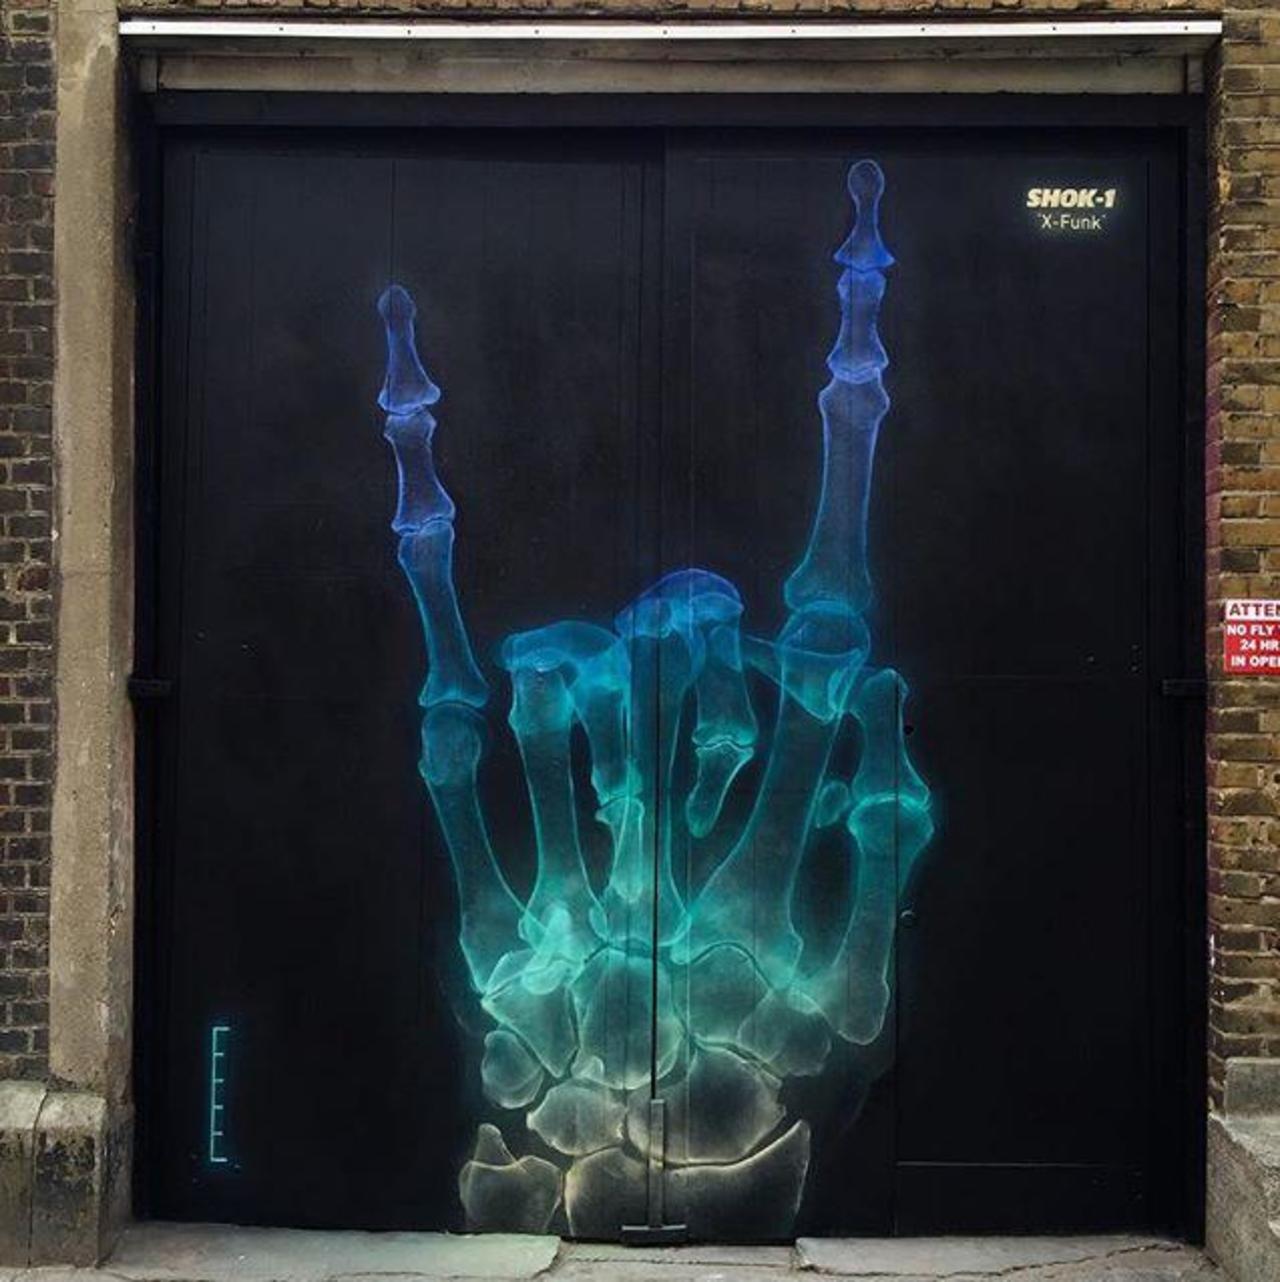 New aerosol X Ray Street Art by Shok-1 in London

#art #arte #graffiti #streetart http://t.co/pAAFHTgwam